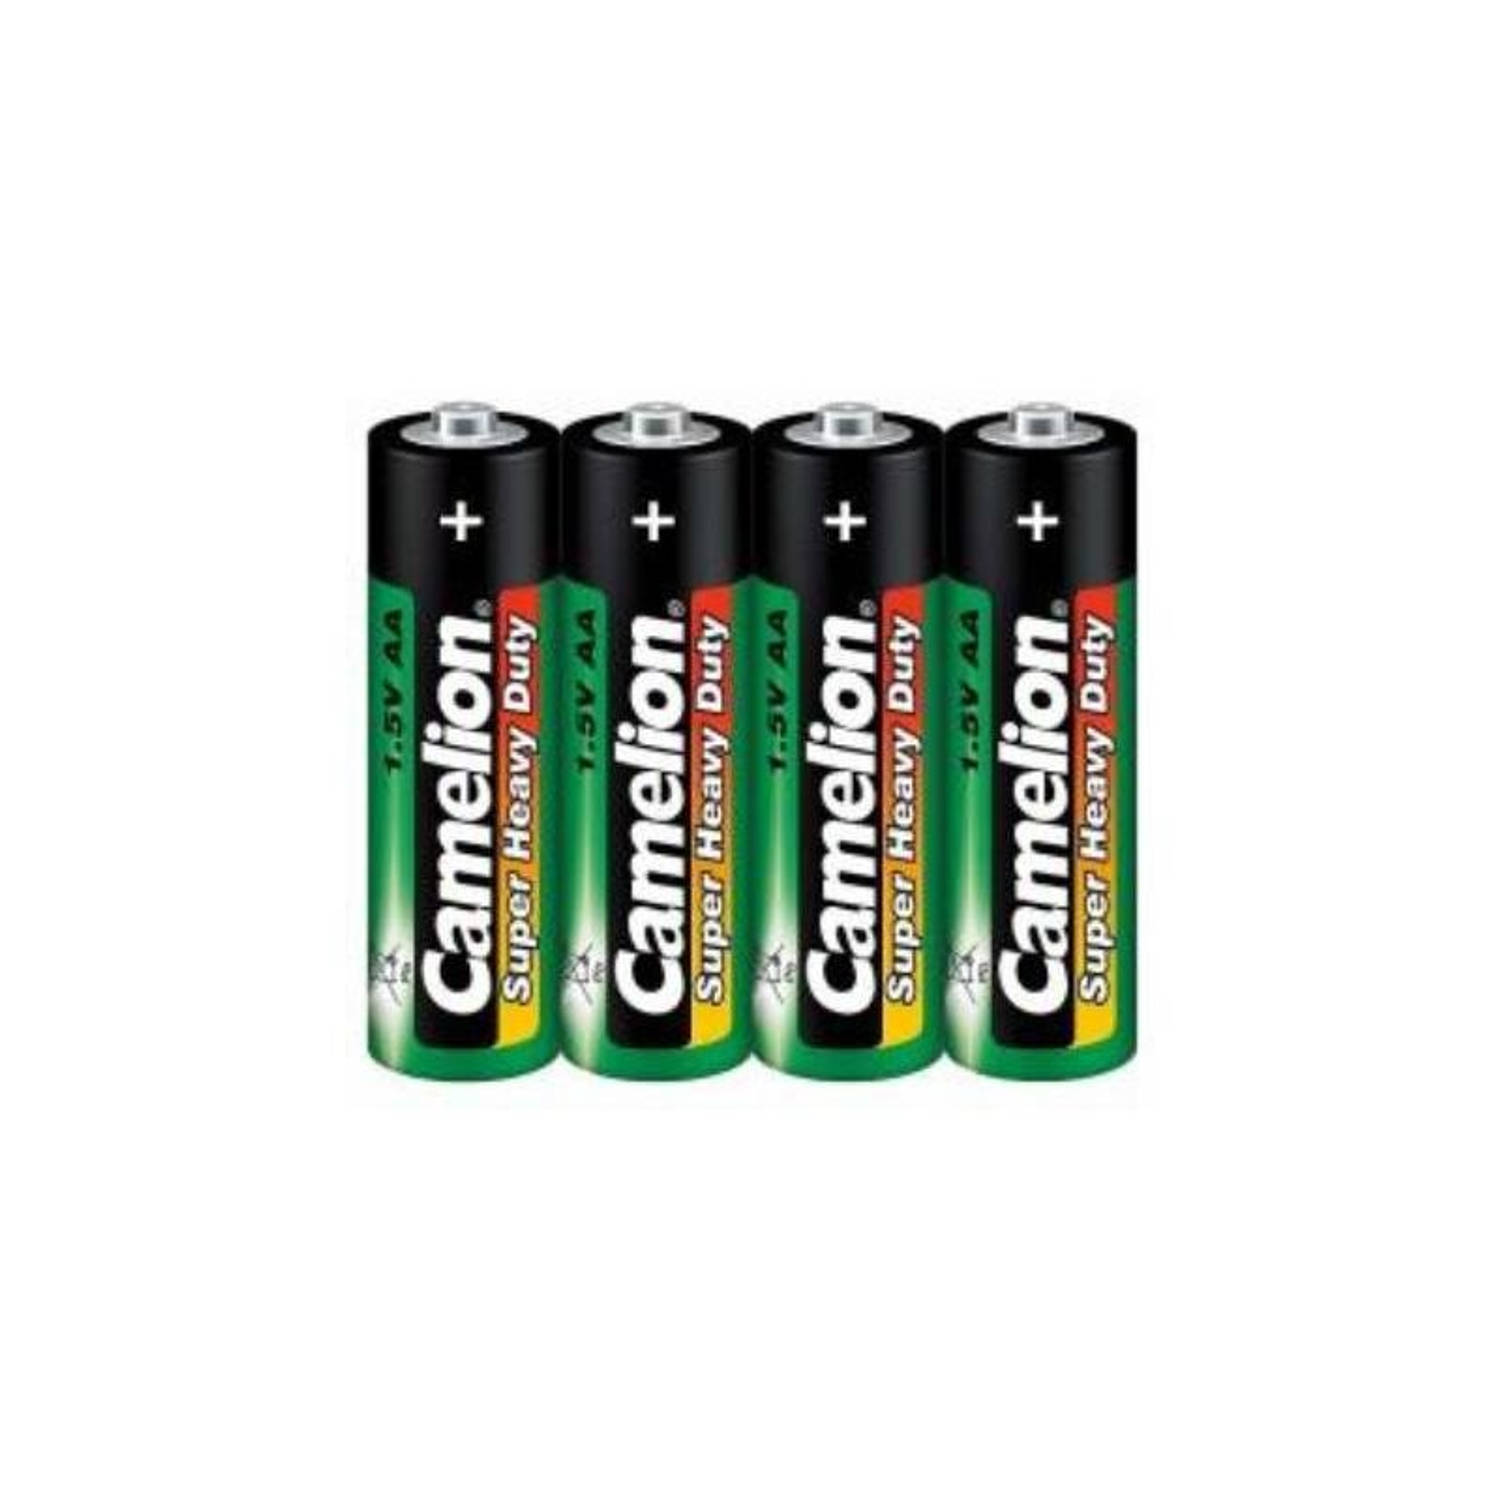 Camelion Batterijen Aa Longlife 1.5v Groen/zwart 4 Stuks